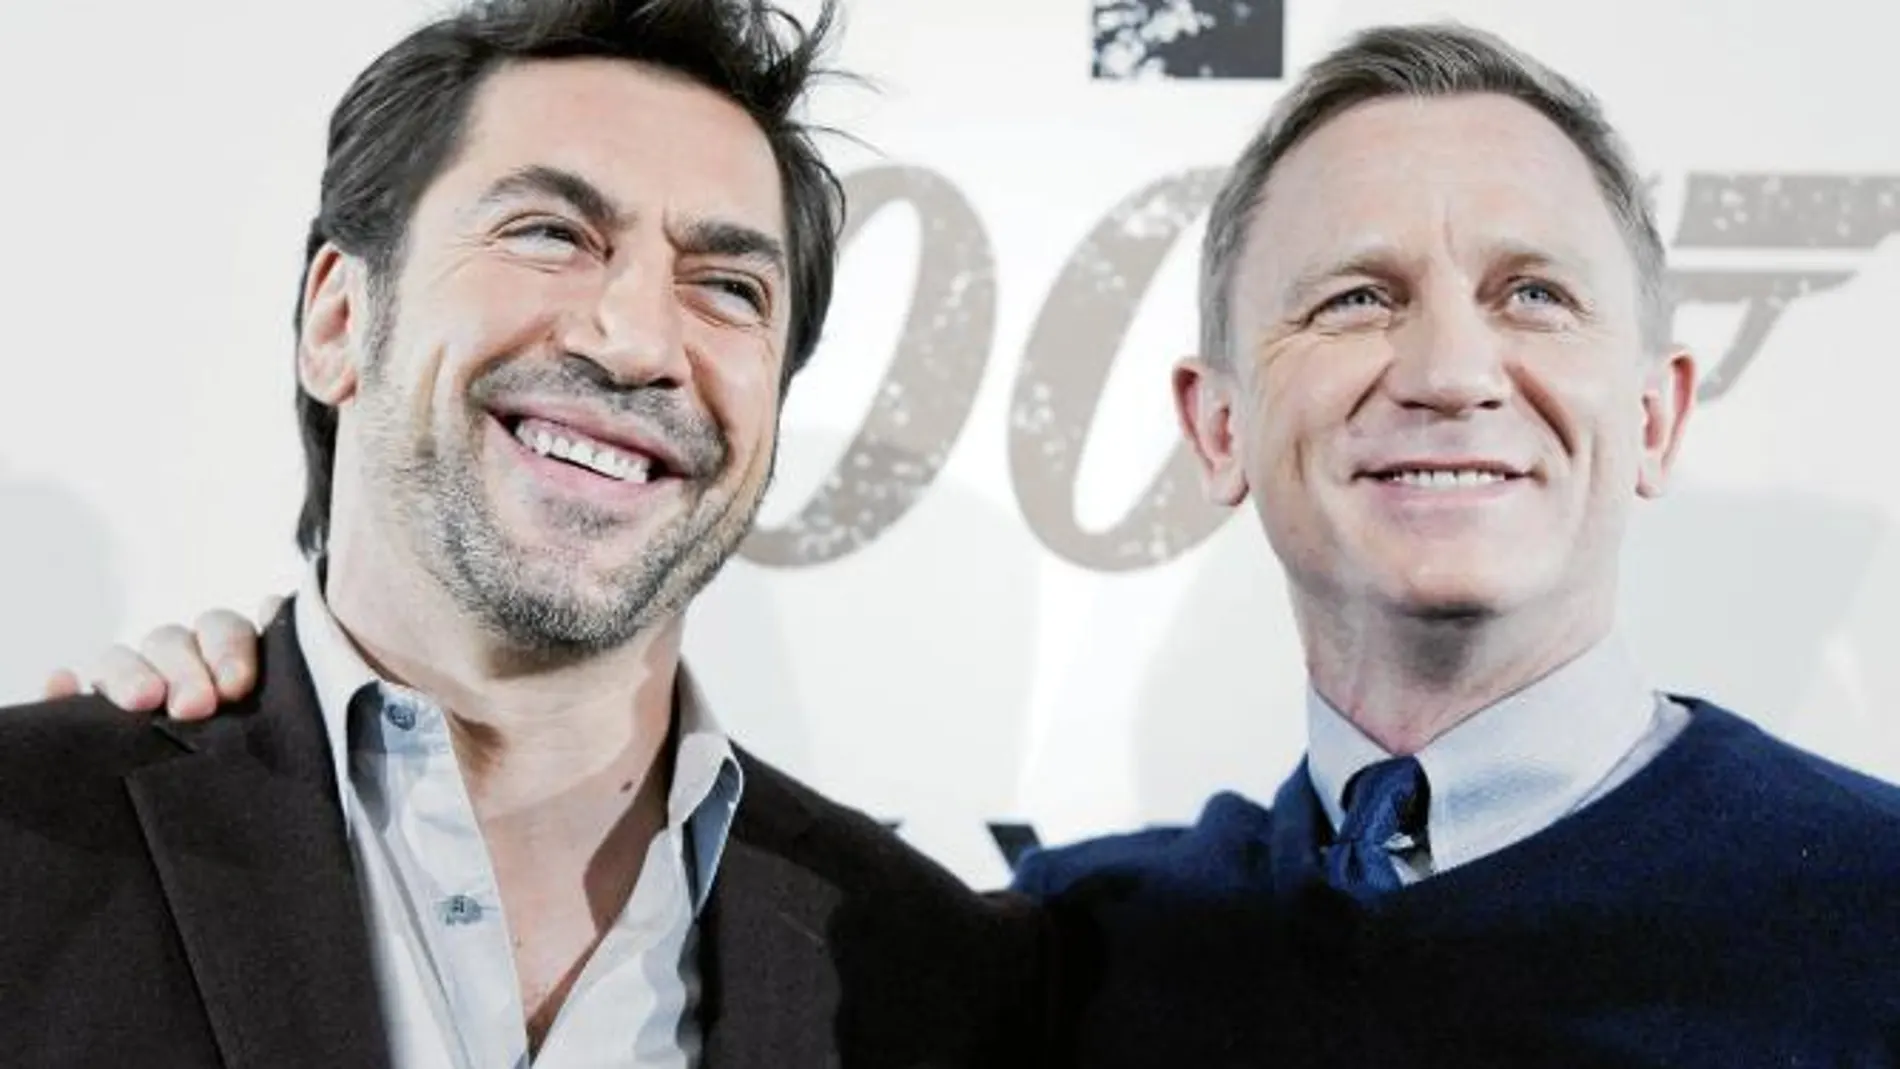 Javier Bardem y Daniel Craig, durante el «photocall» de «Skyfall» en Madrid